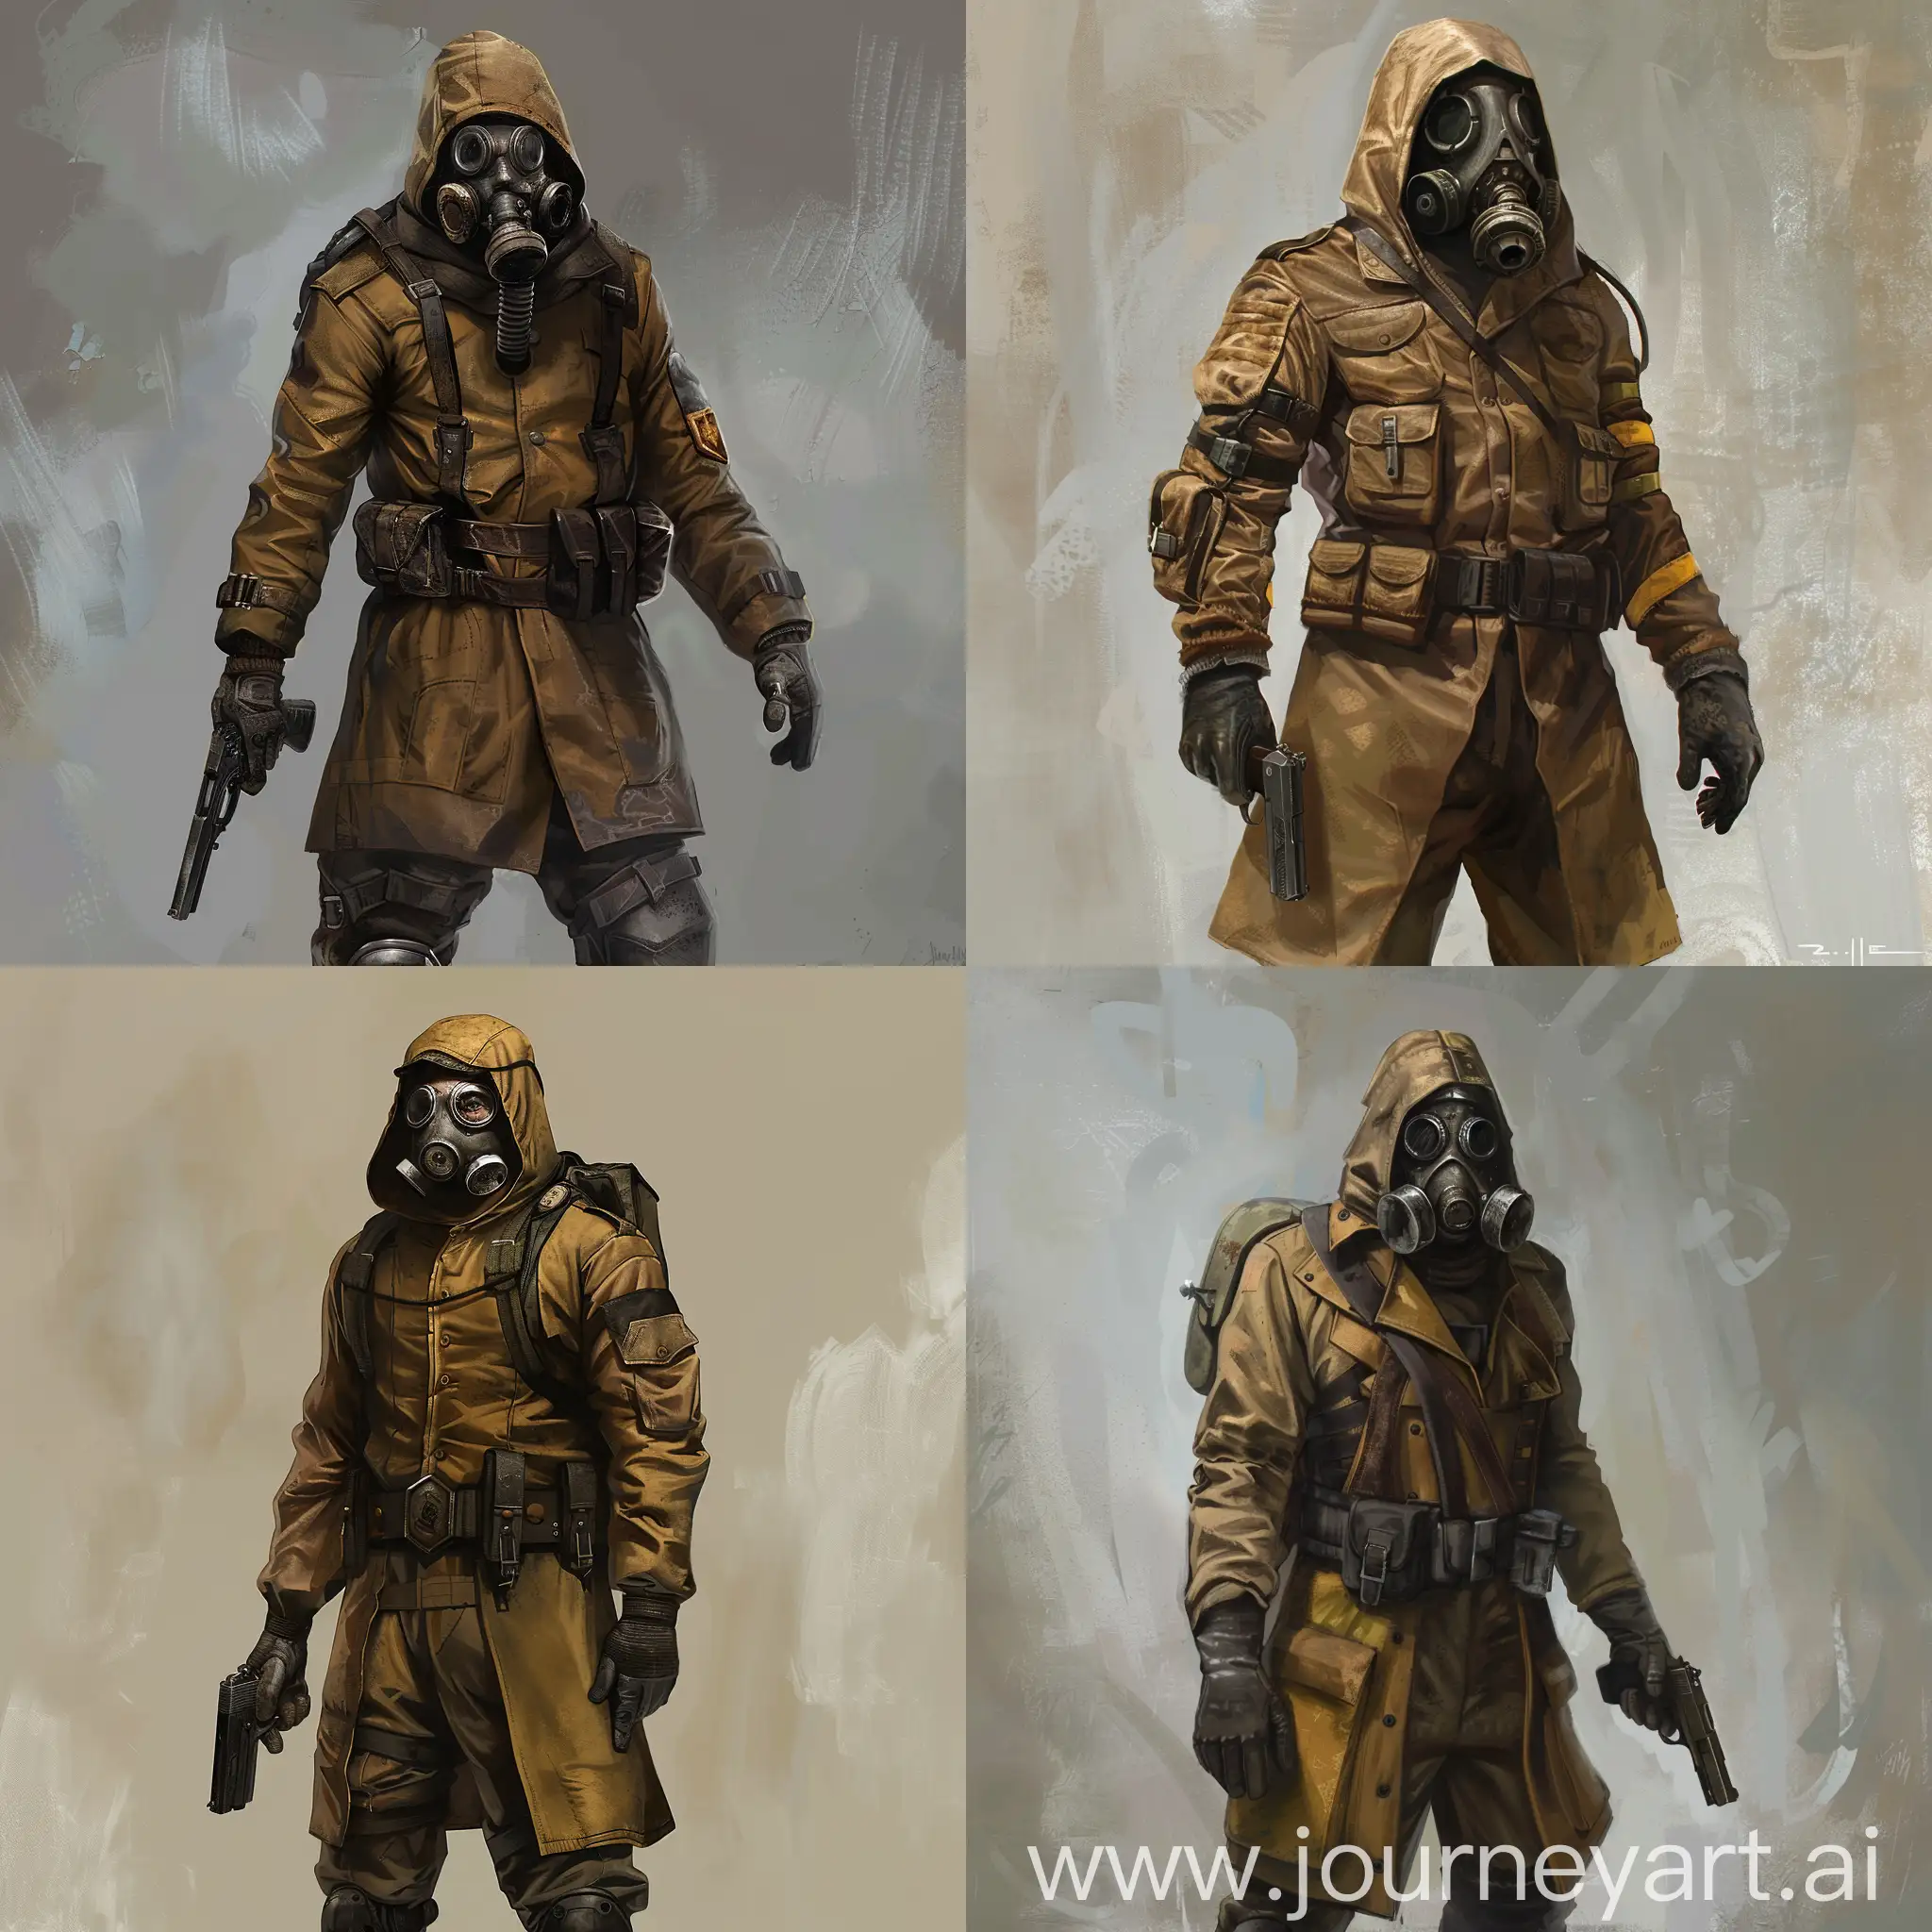 Concept art character newcomer stalker from game S.T.A.L.K.E.R. gasmask, brown uniform, gasmask, pistol in hand.